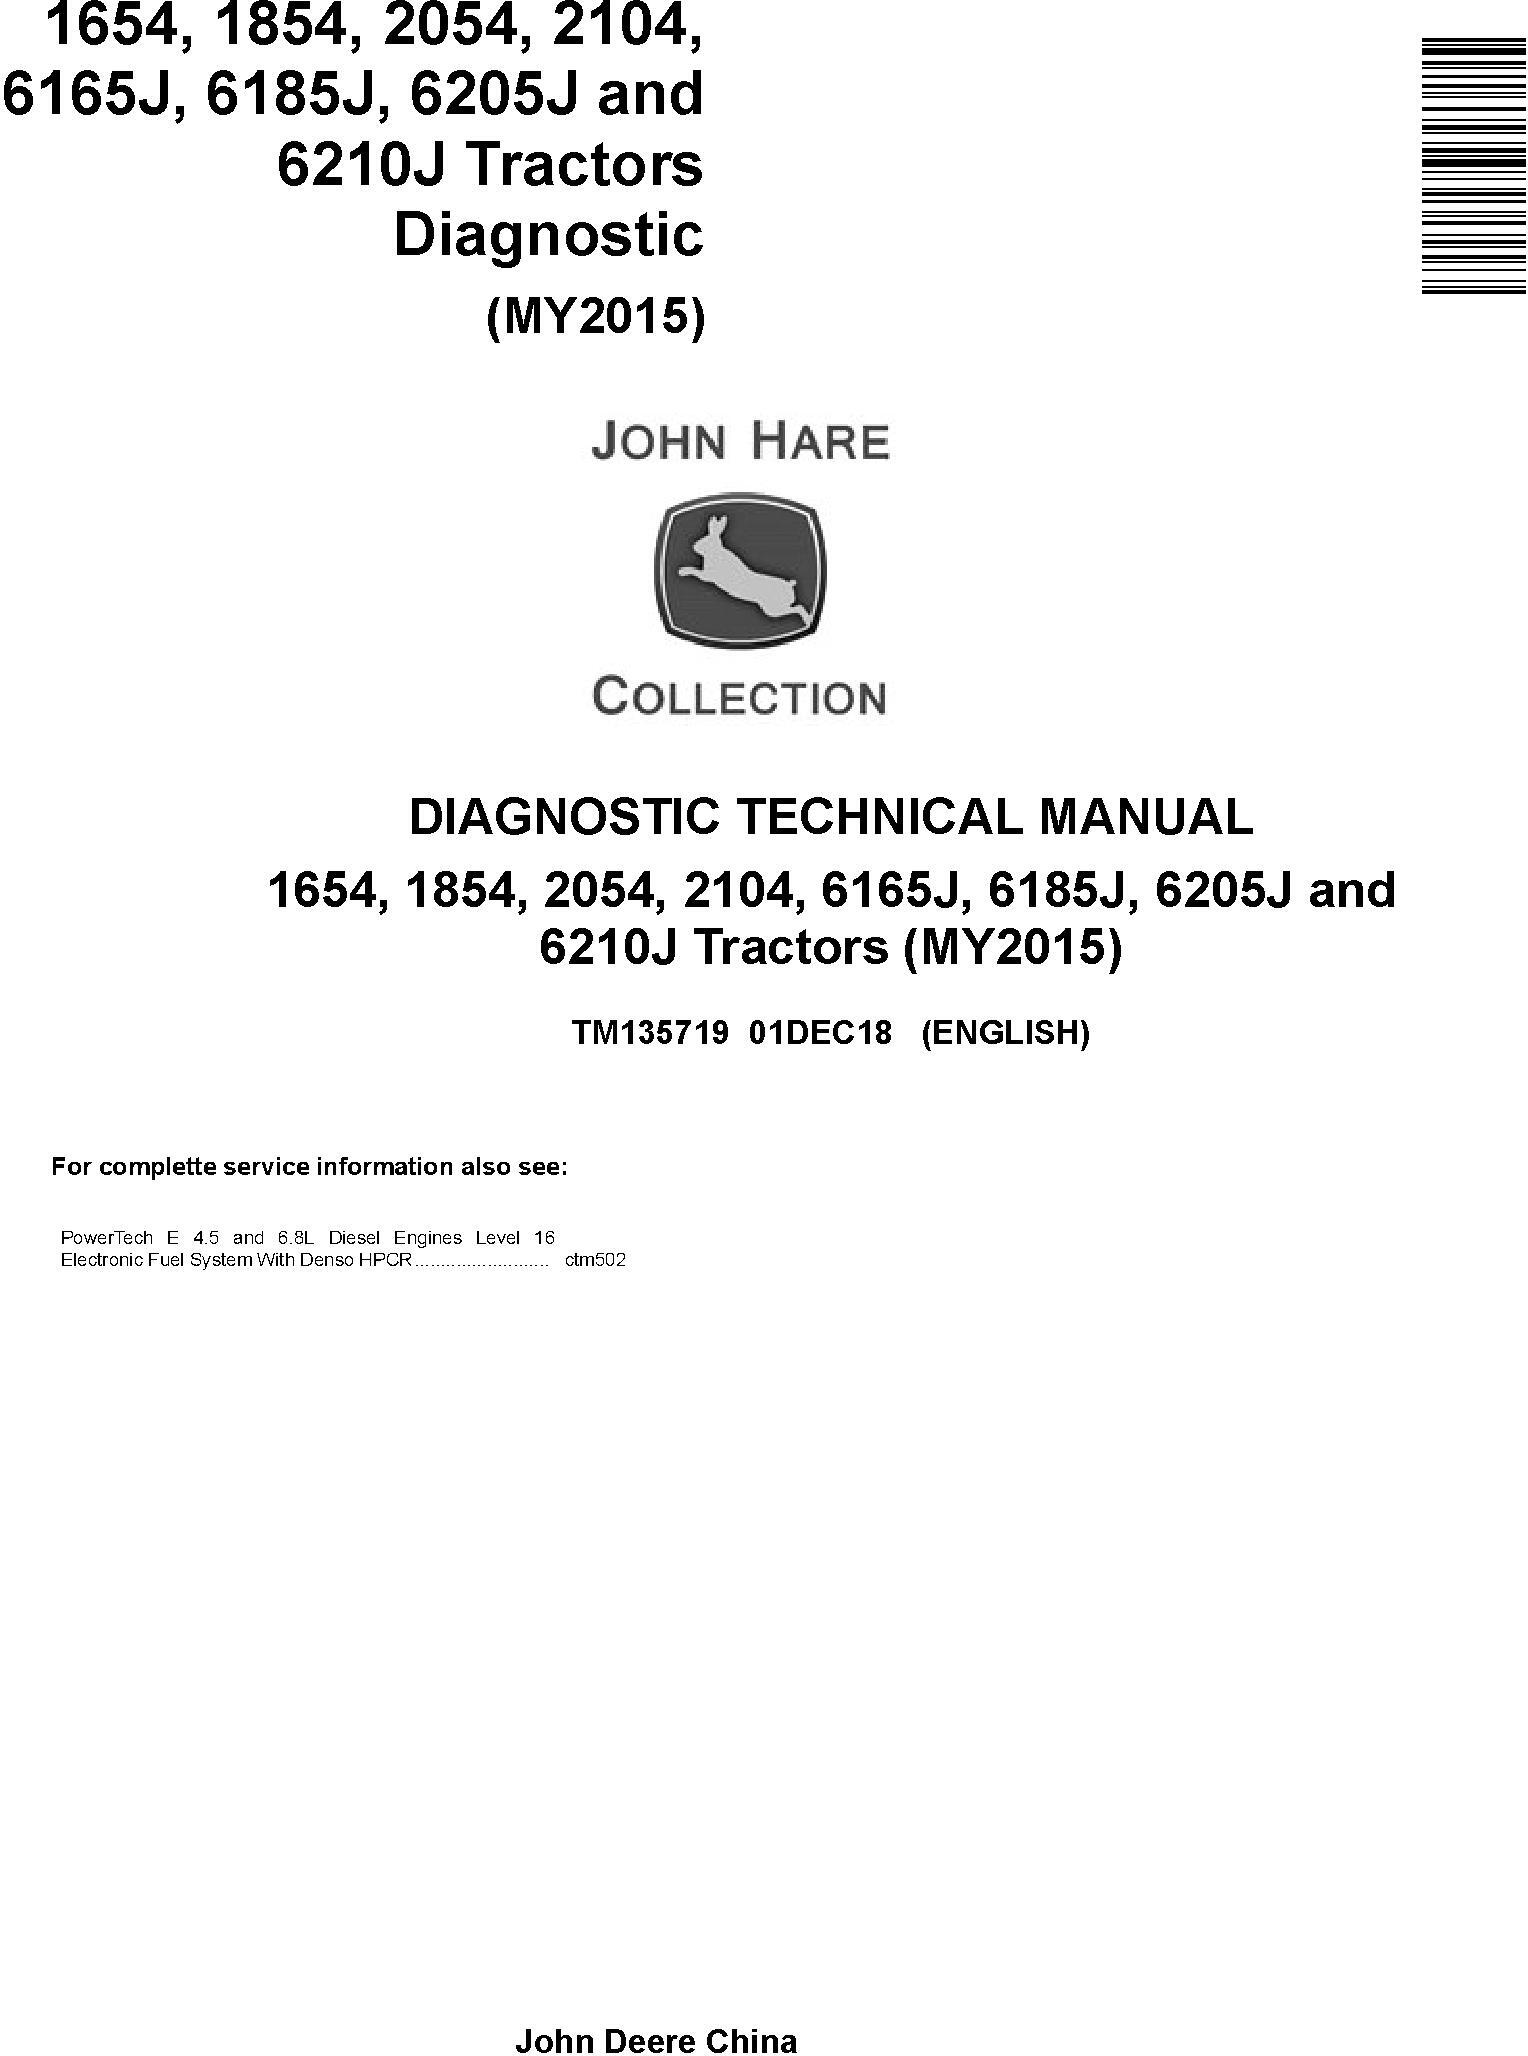 John Deere 1654 to 2104, 6165J to 6210J Tractor Diagnostic Technical Manual TM135719